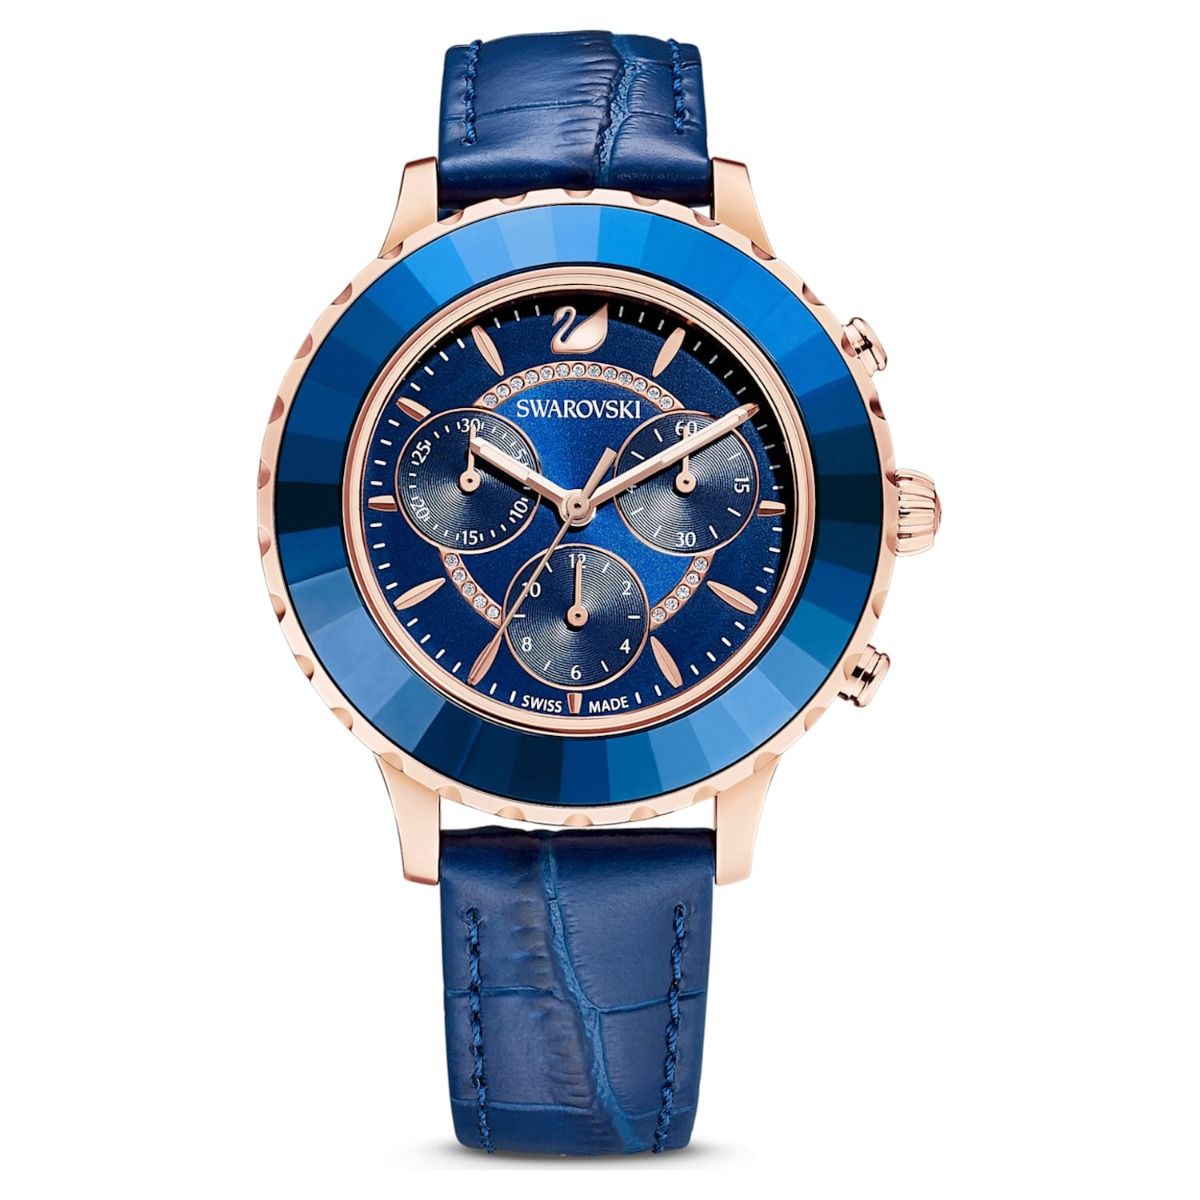 Buy Swarovski Octea Lux Chrono watch - Blue Online in UK